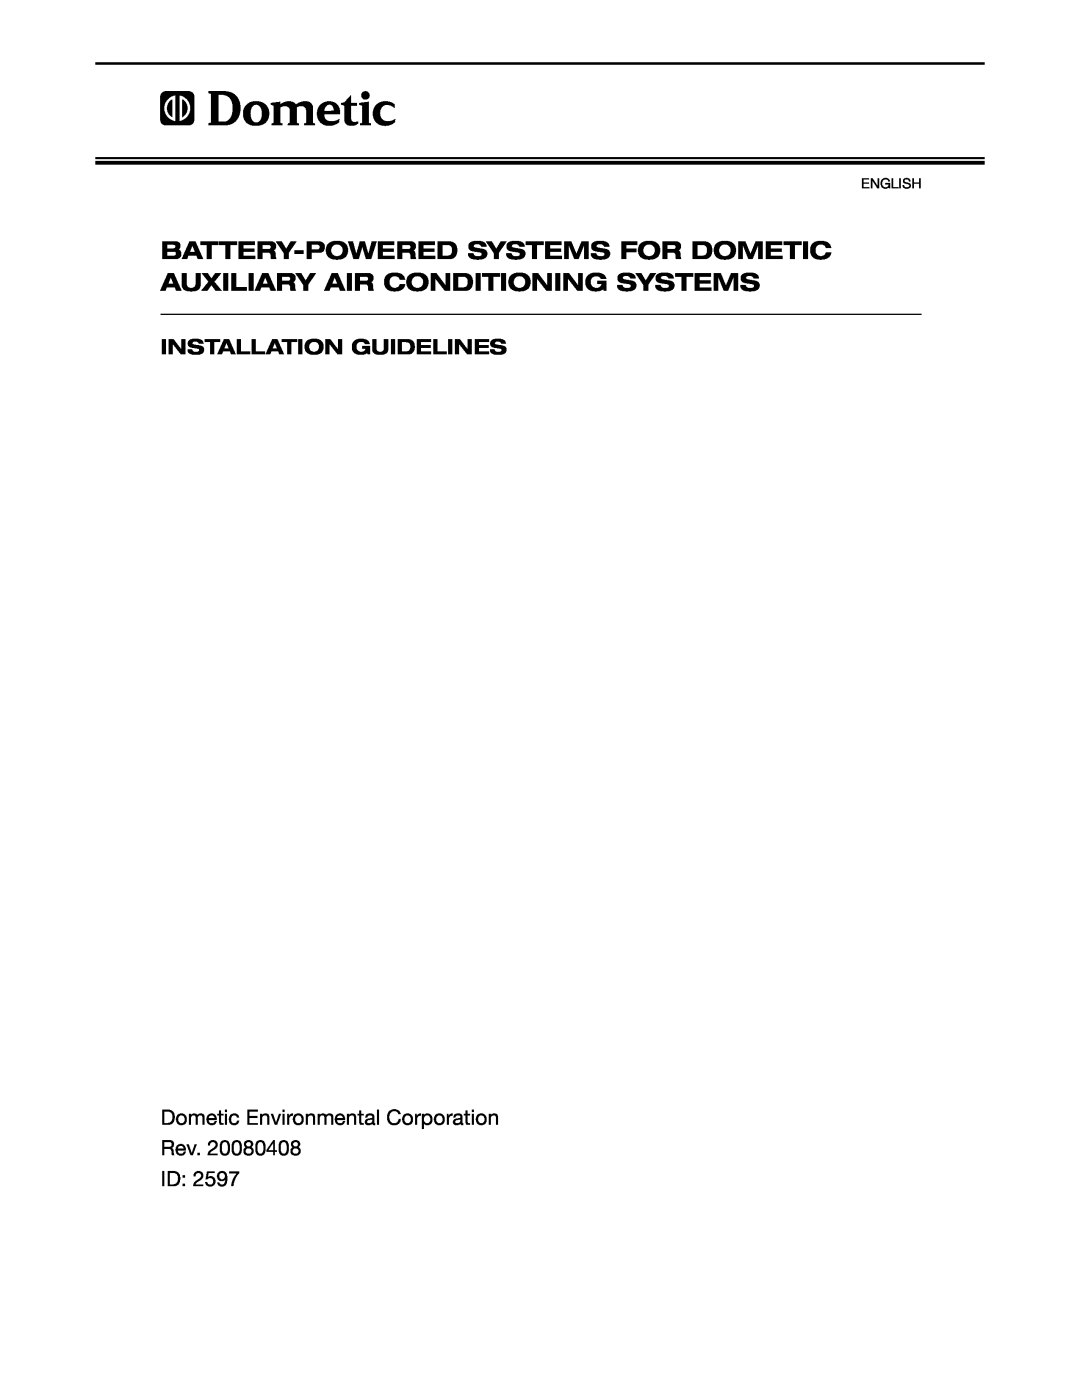 Dometic 2597 manual Dometic Environmental Corporation Rev. ID, Installation Guidelines, English 